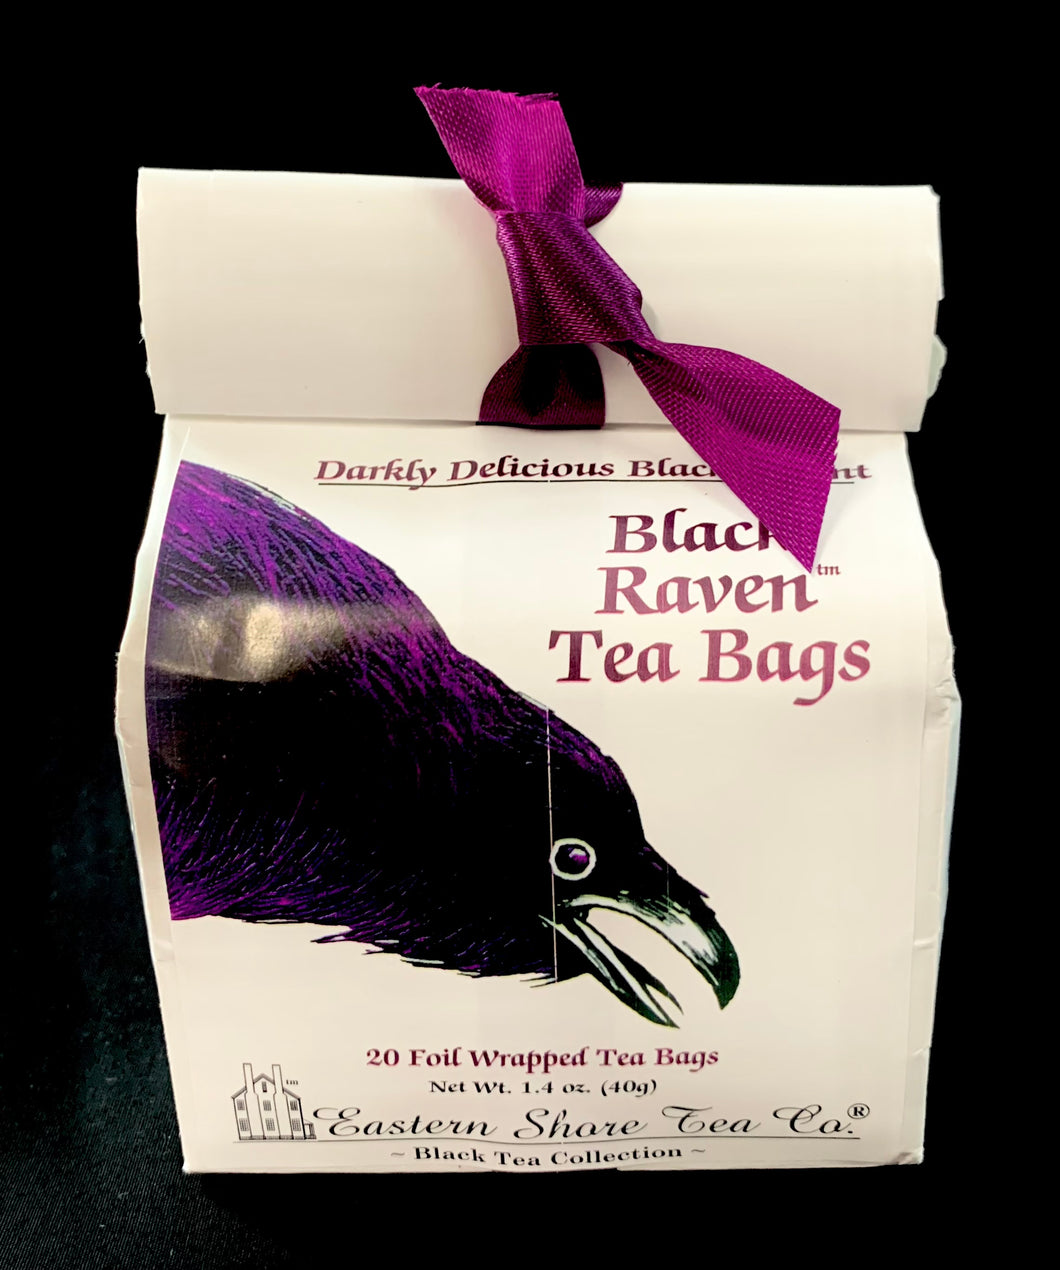 Black Raven Tea Bags- Blackcurrant Black Tea Blend